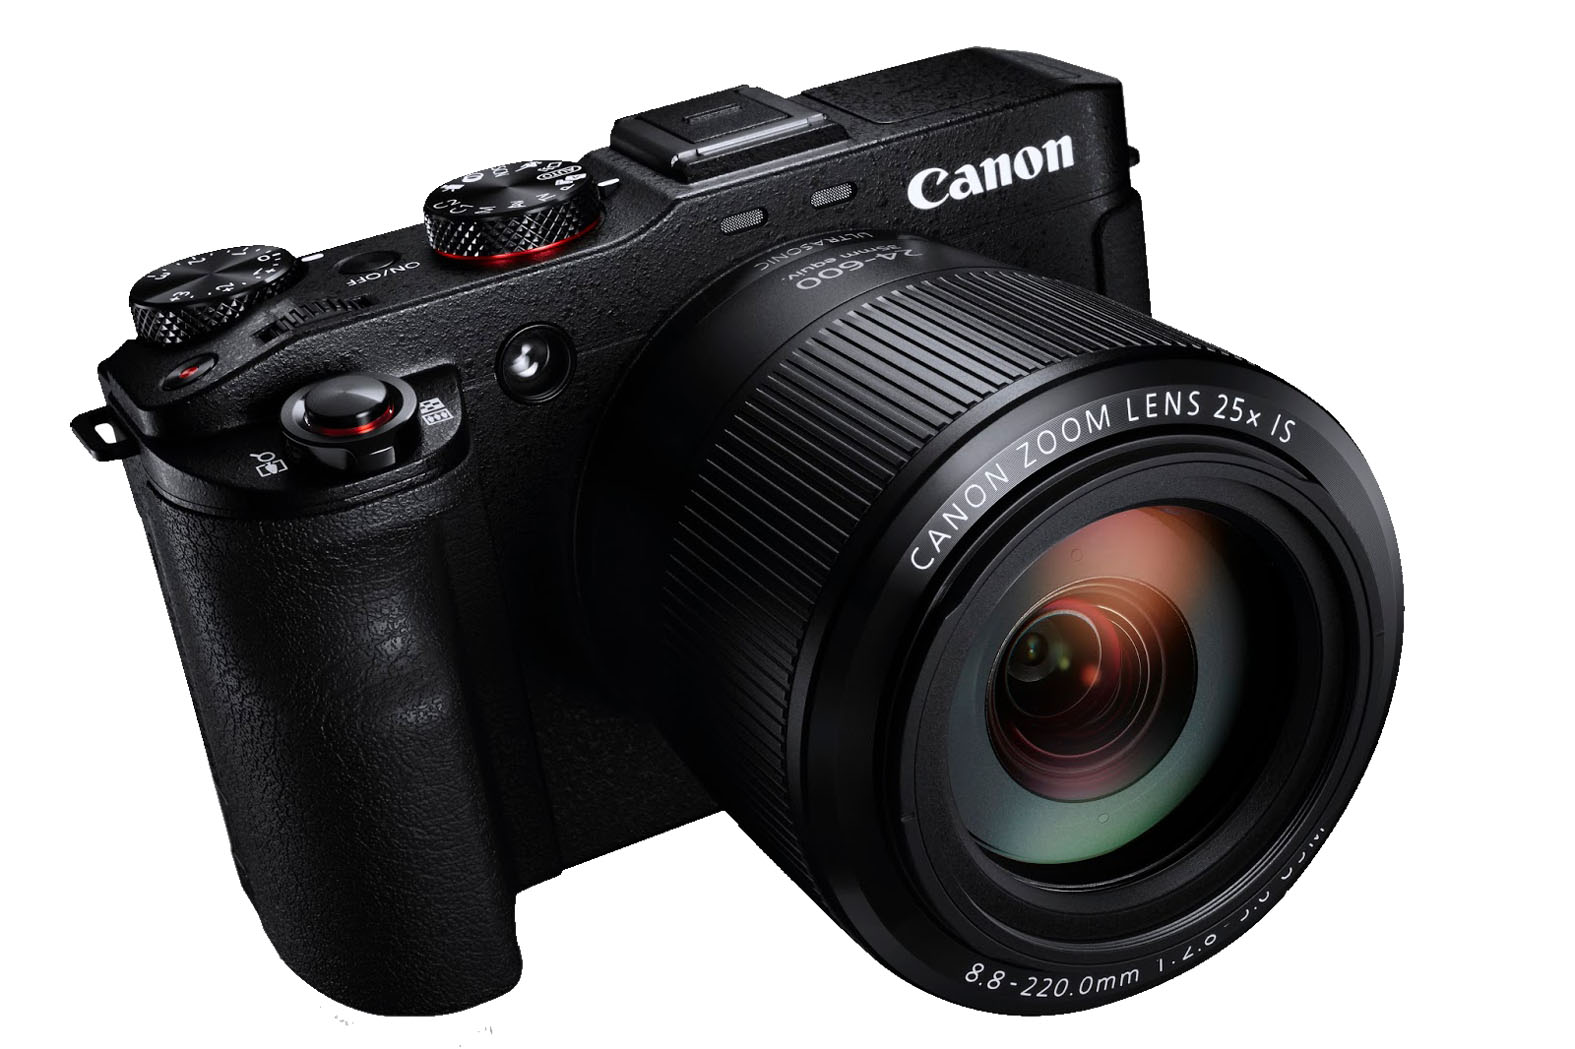 Canon PowerShot G 3X, Untuk Kamu Yang Suka Travelling